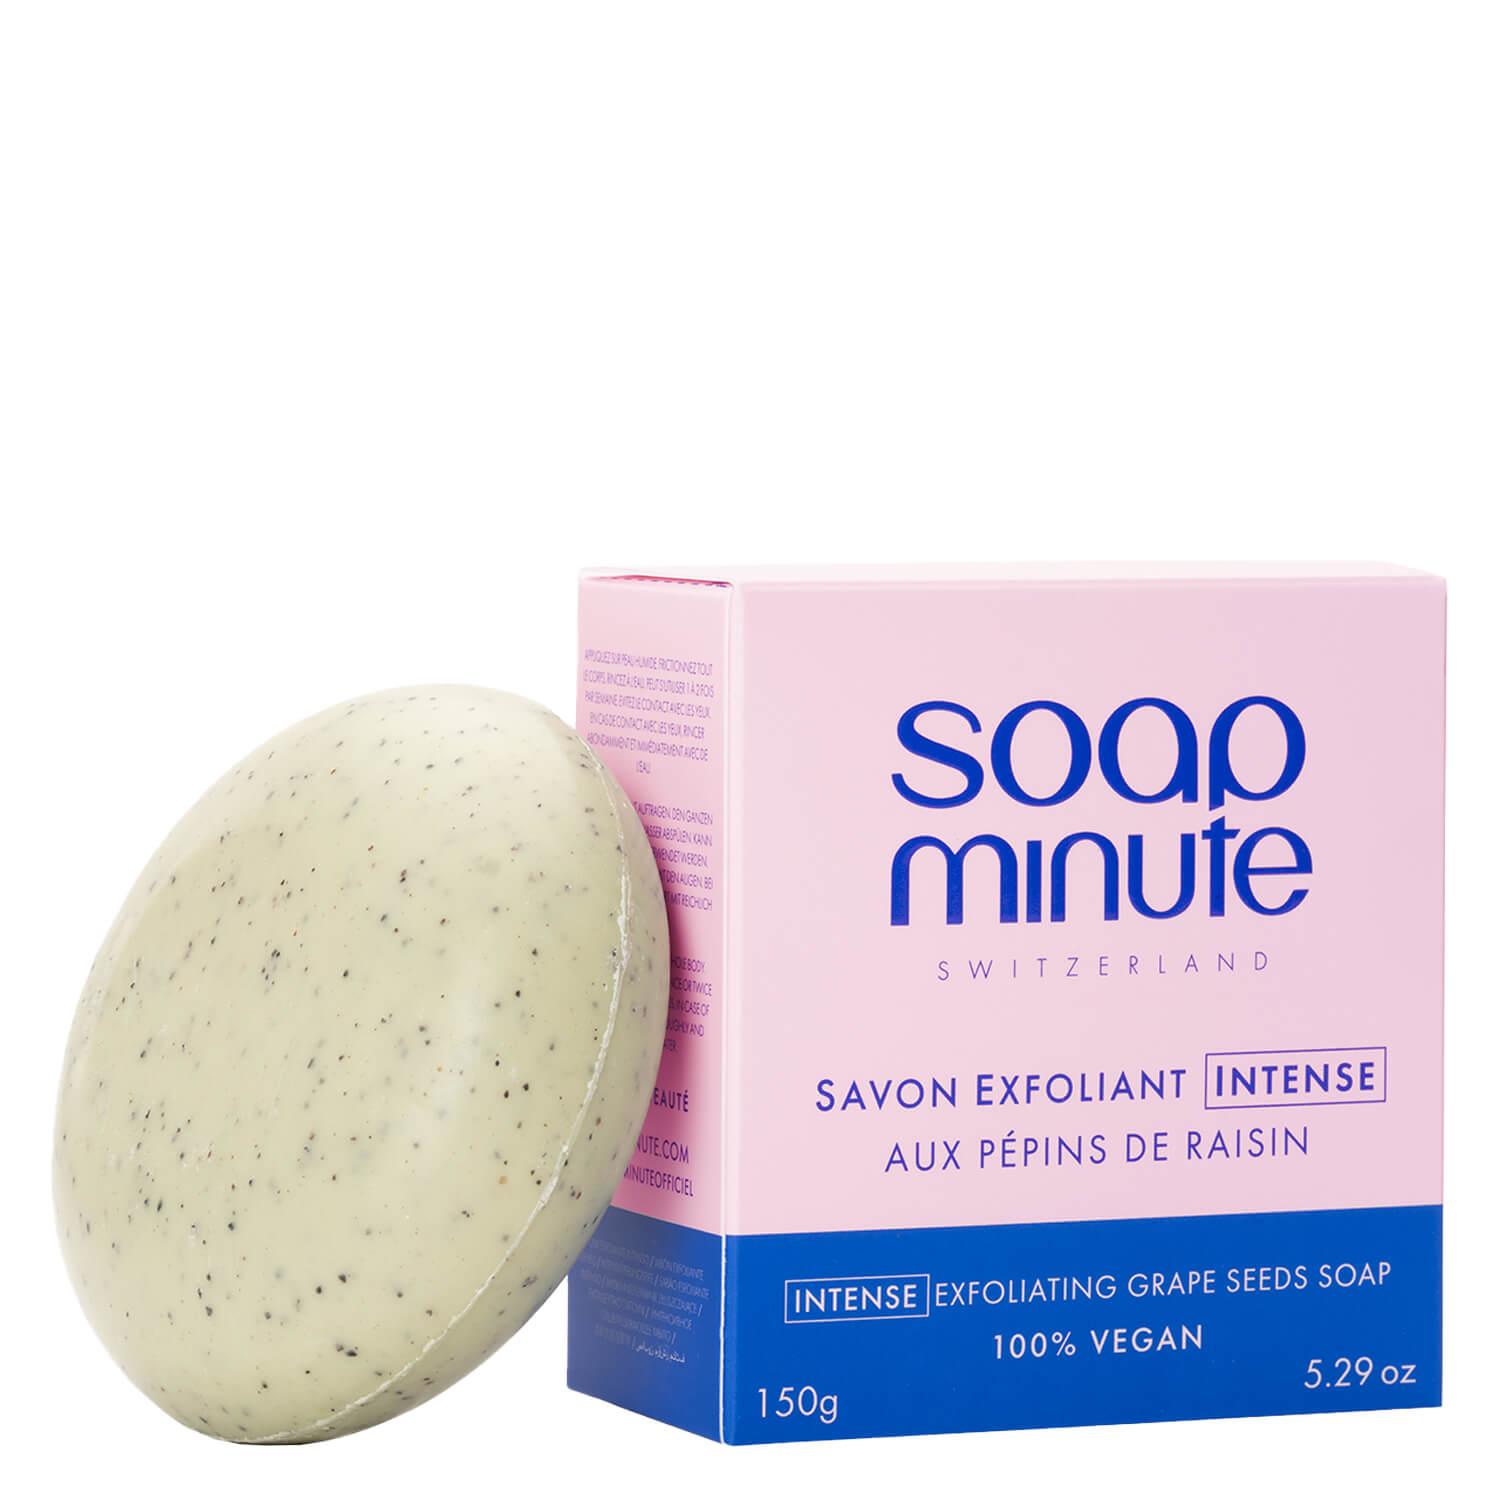 soapminute - Intense Exfoliating Grape Seeds Soap